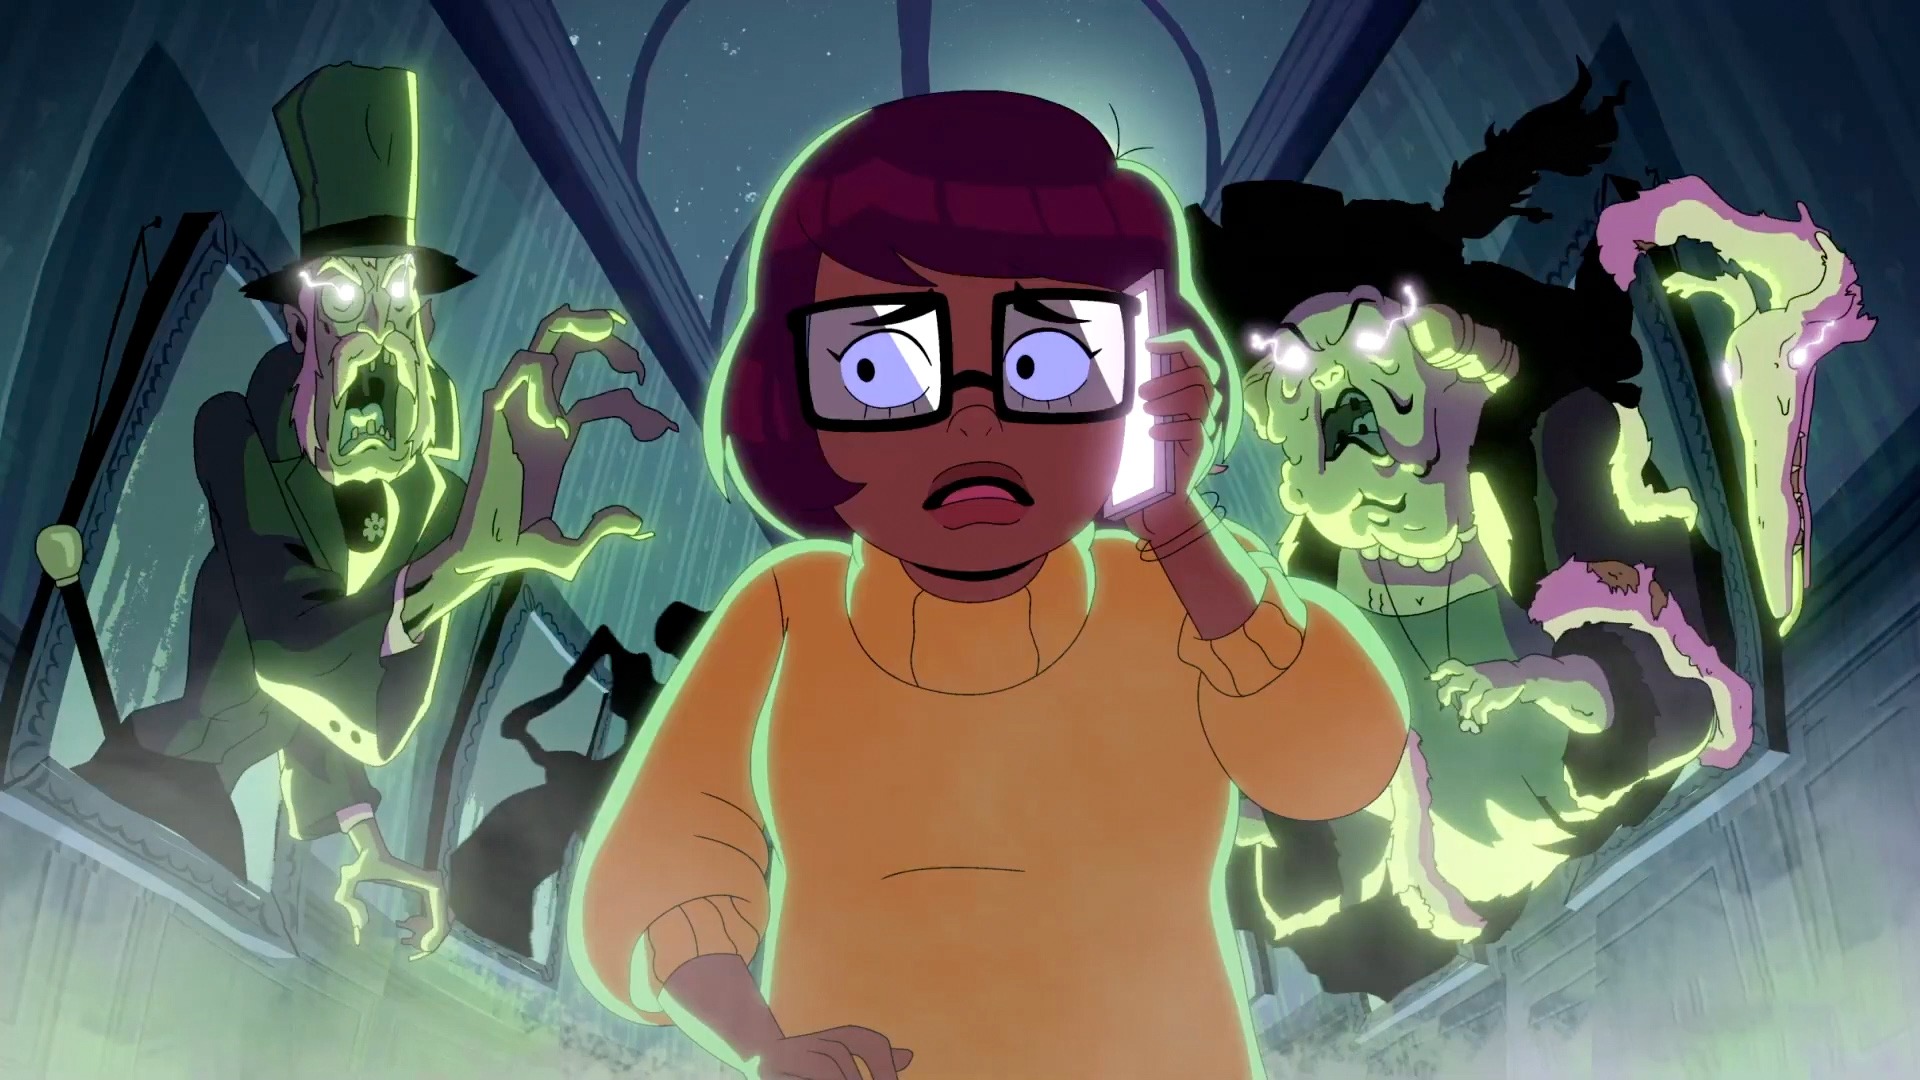 Velma's Metacritic score : r/Scoobydoo